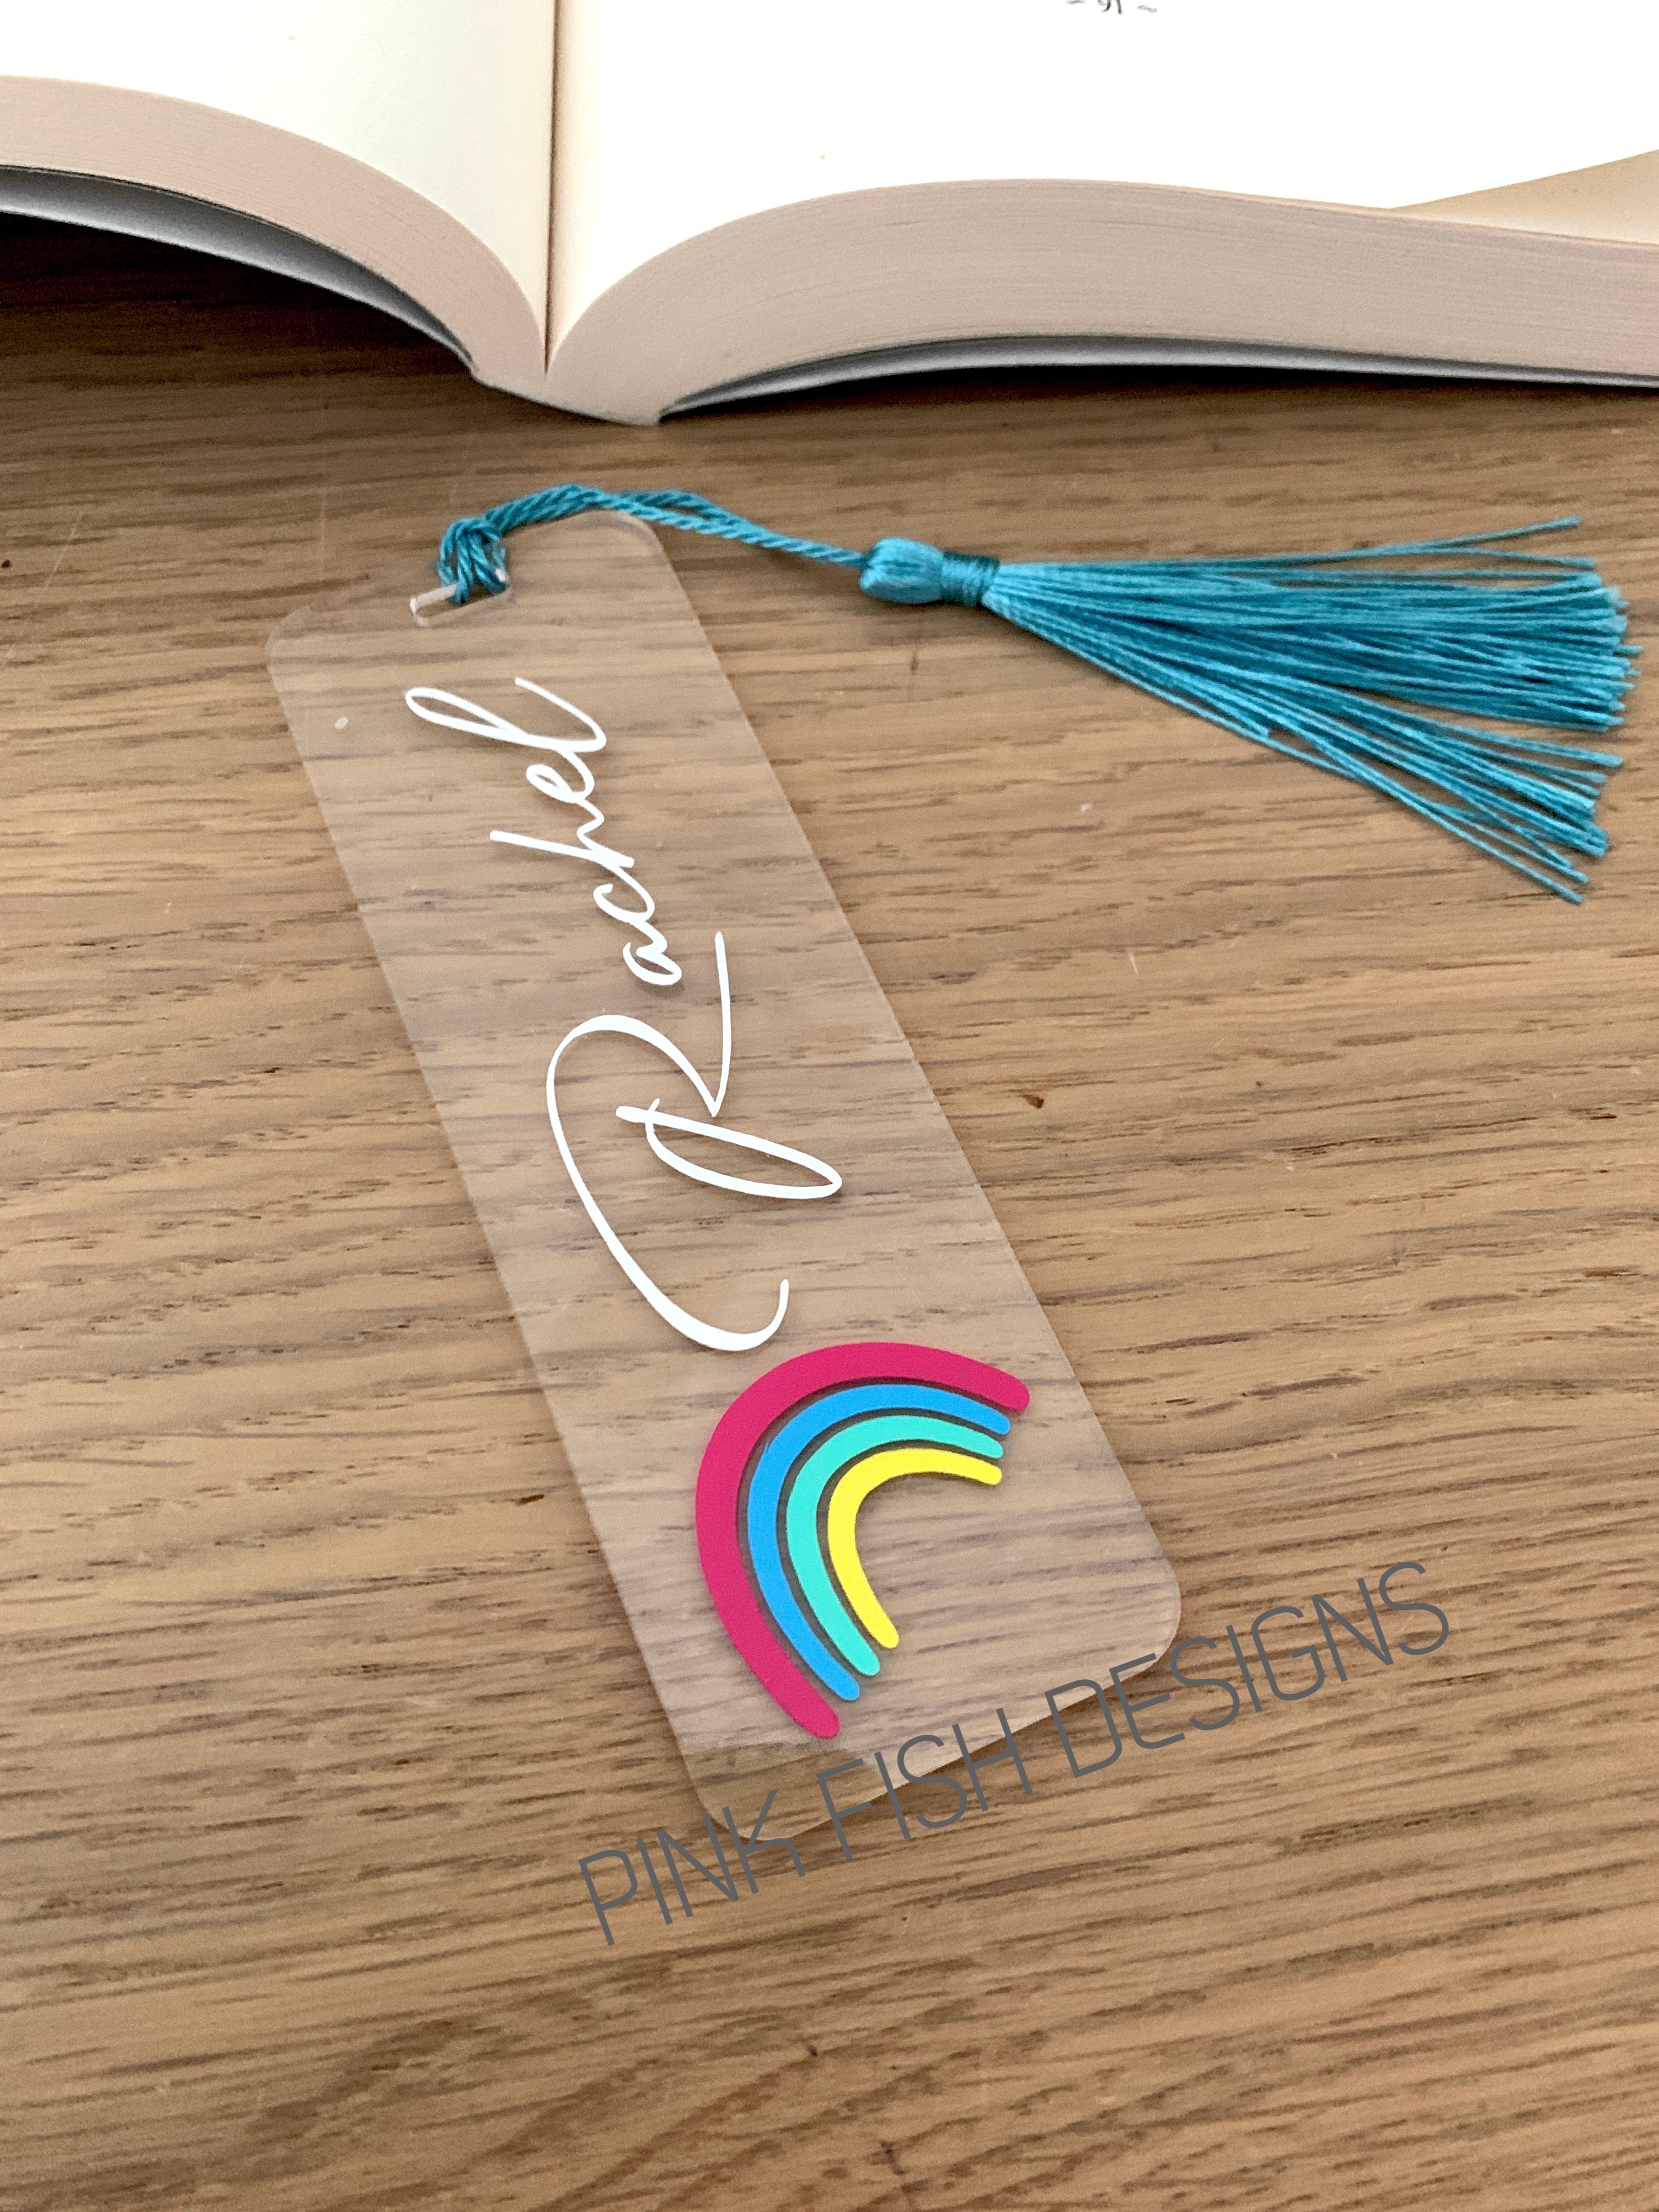 Personalised Bookmark